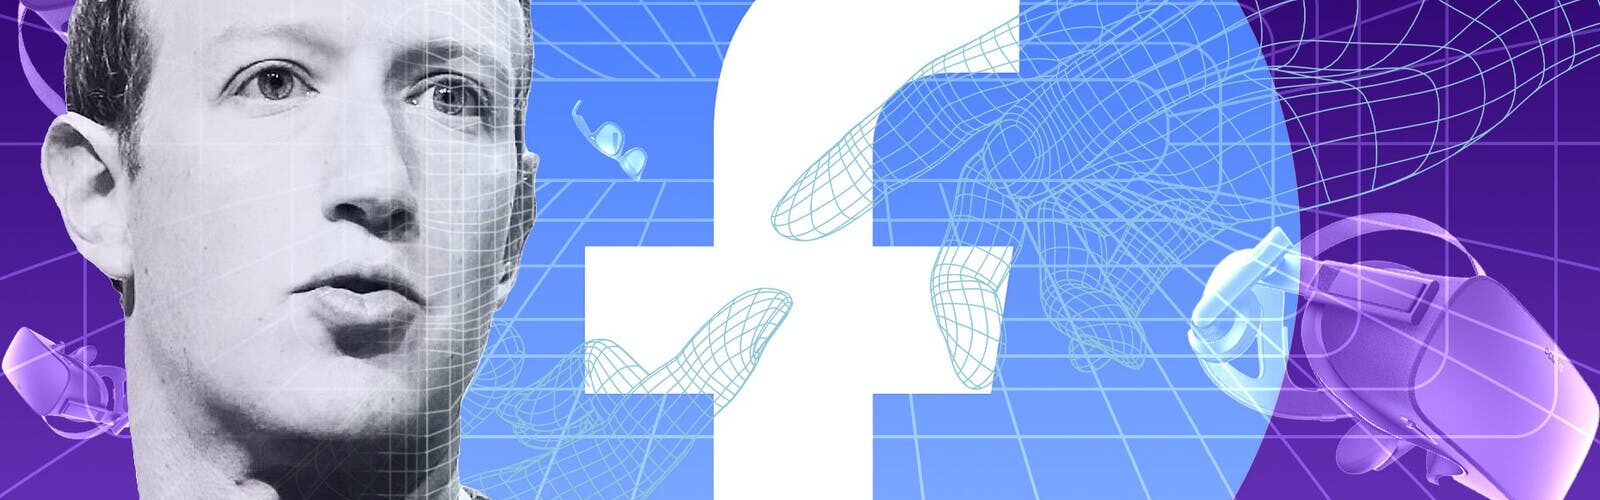 ZAKERBERG PRETI da će povući Facebook i Instagram iz Evrope ali ko još uopšte koristi Facebook?